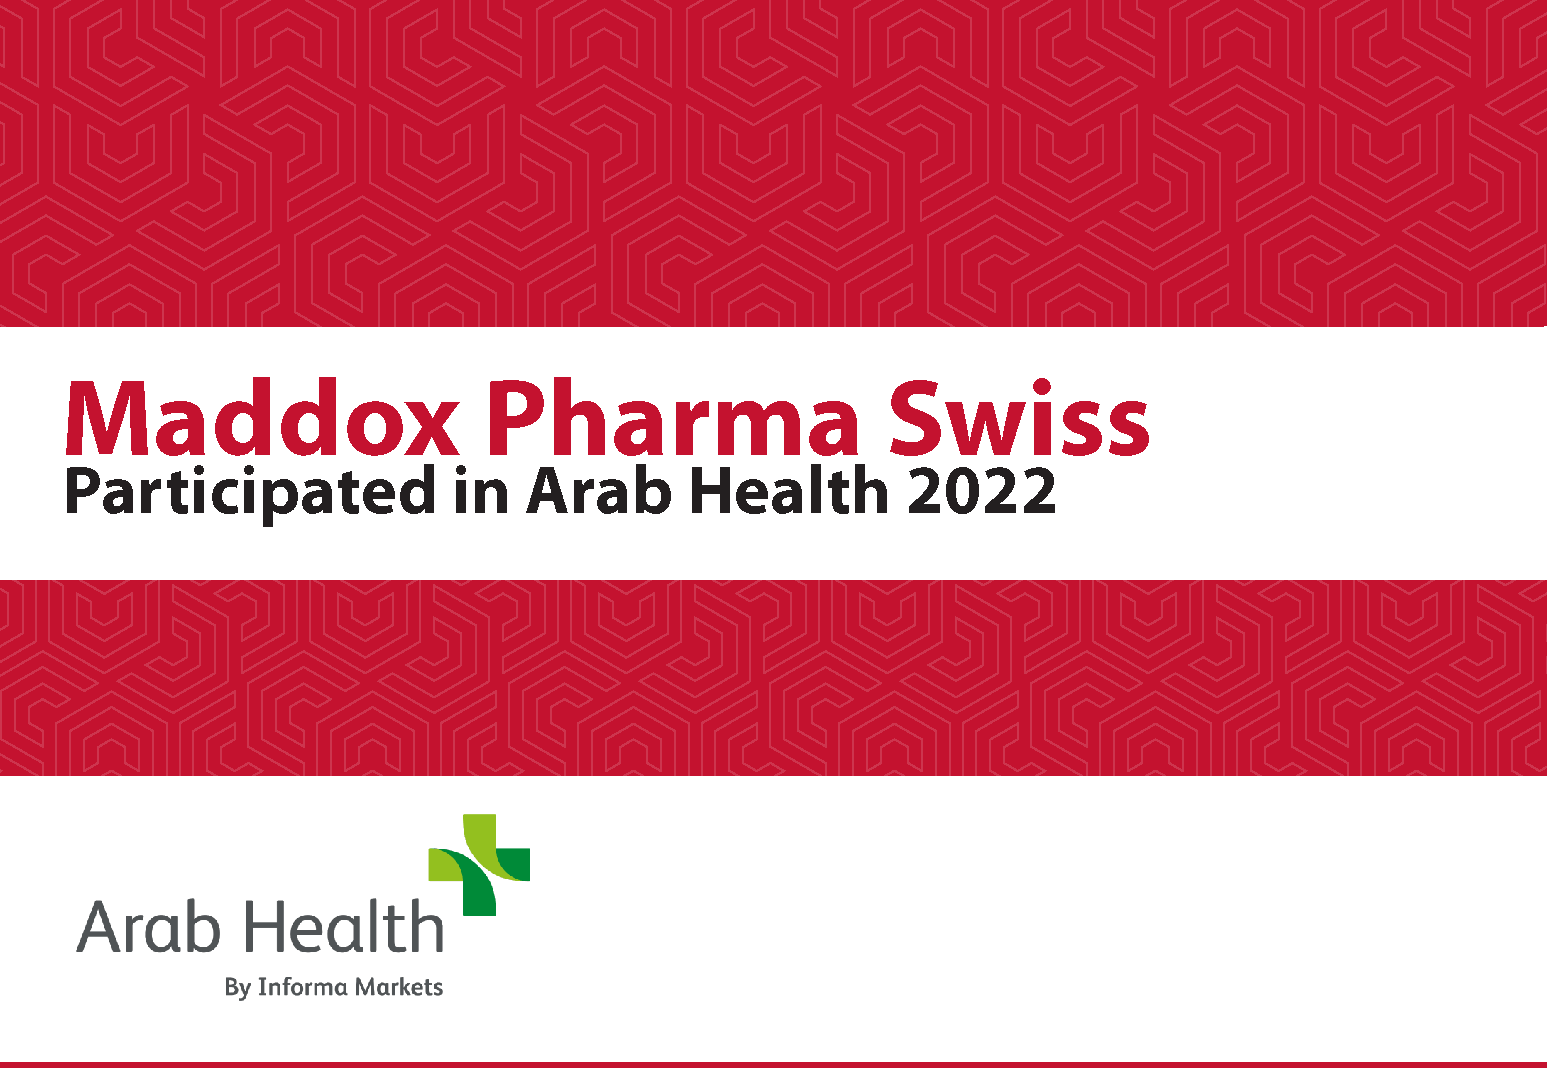 Arab health 2022